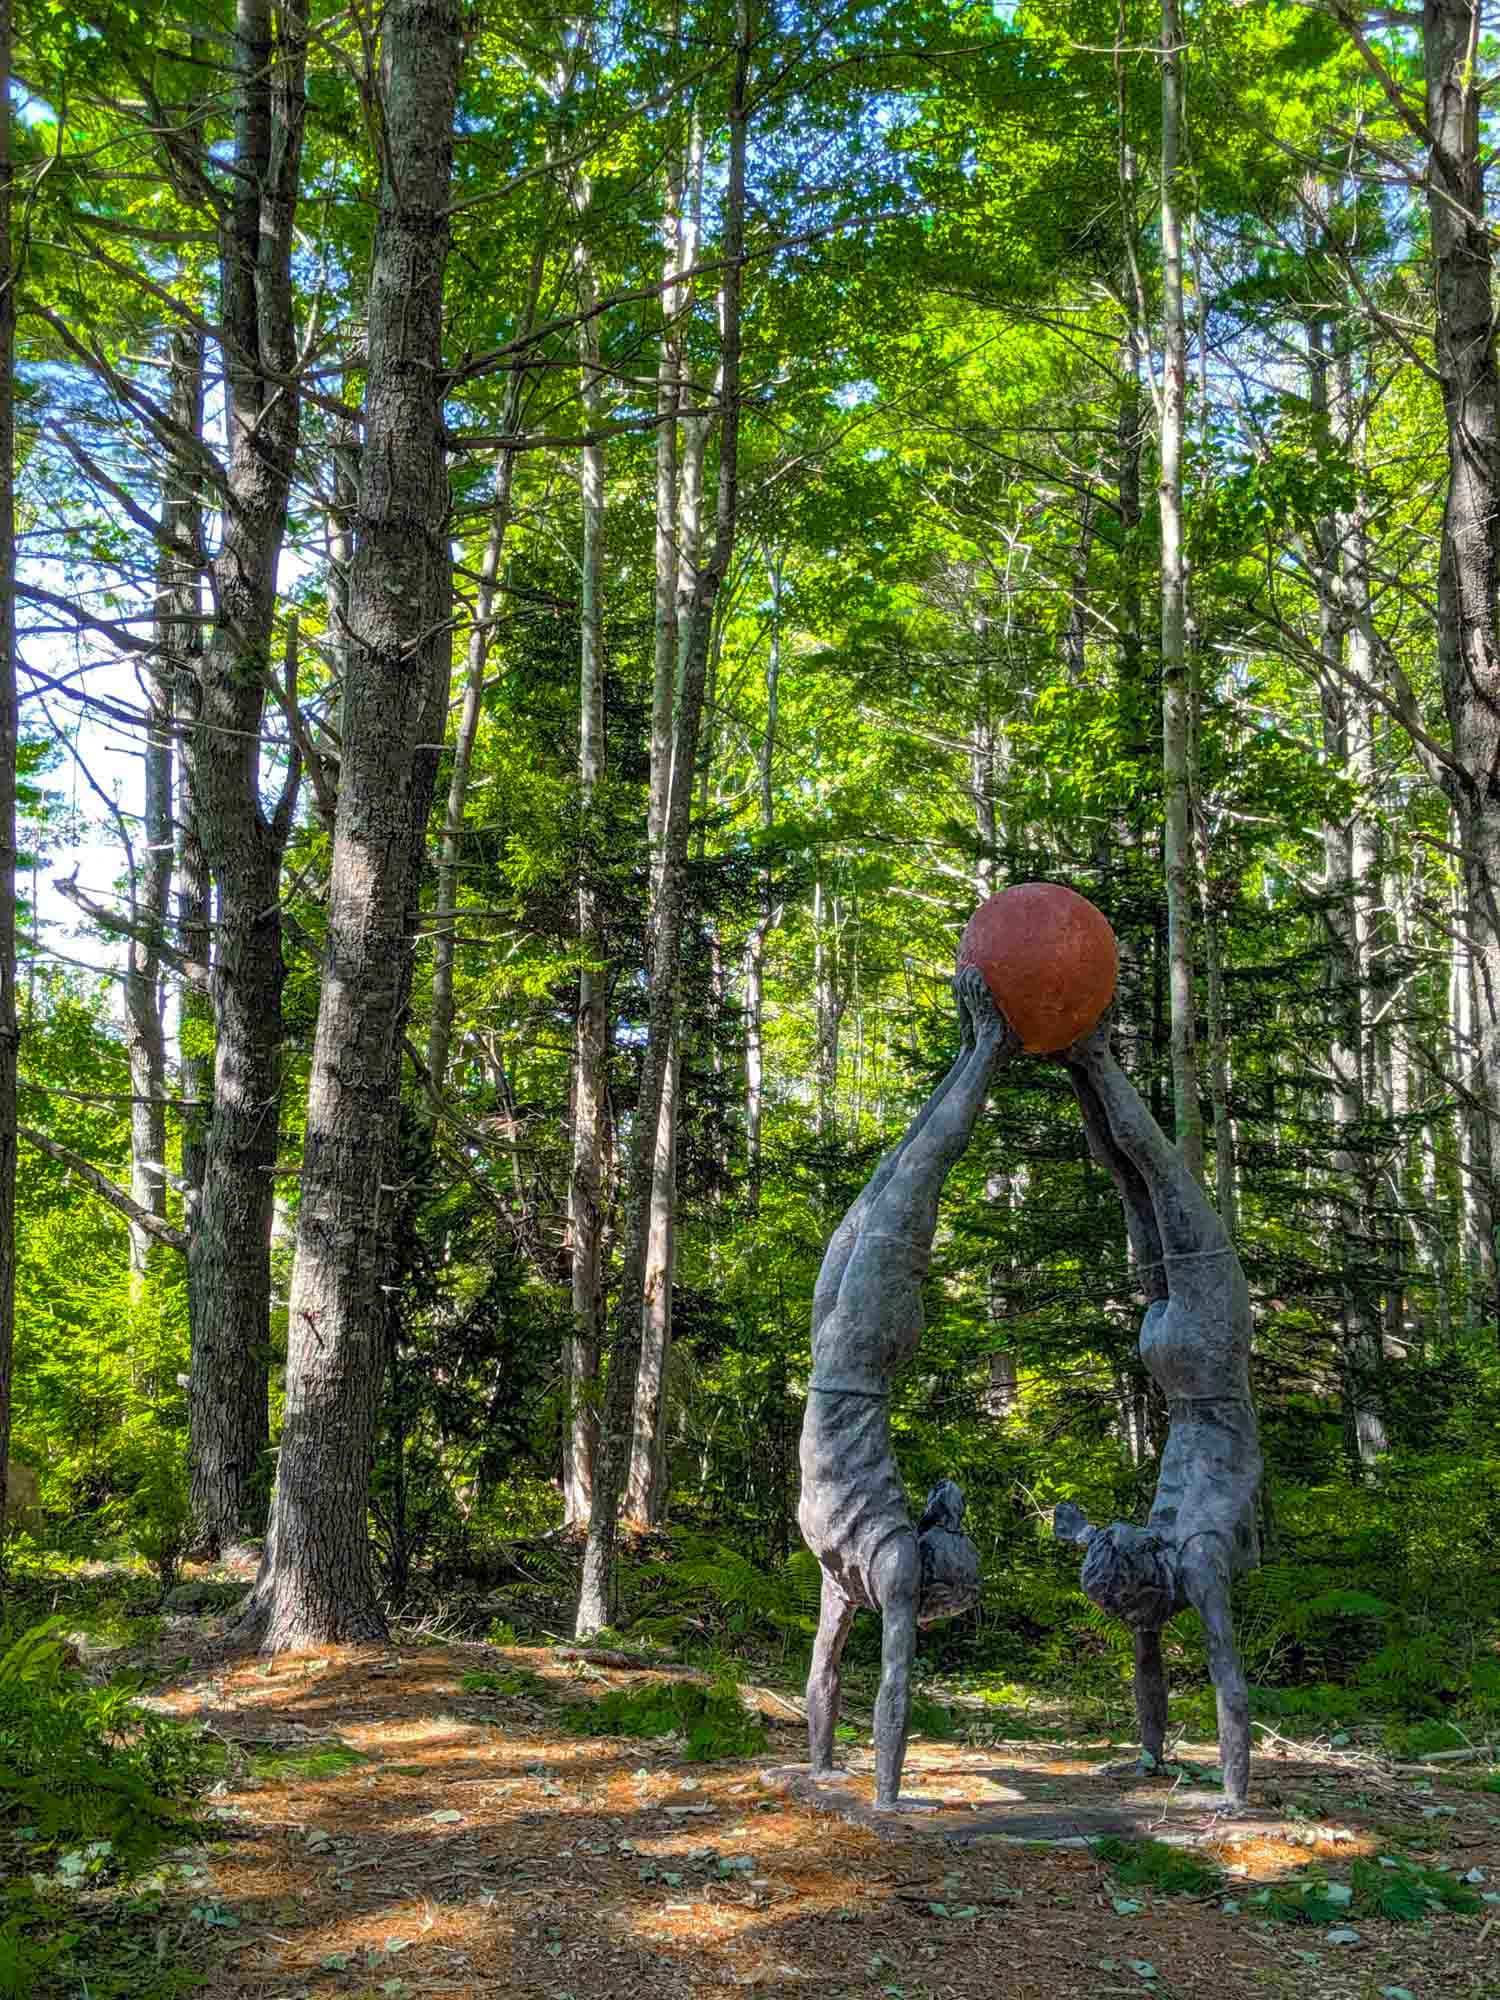 Cosby's Sculpture Forest in Liverpool Nova Scotia